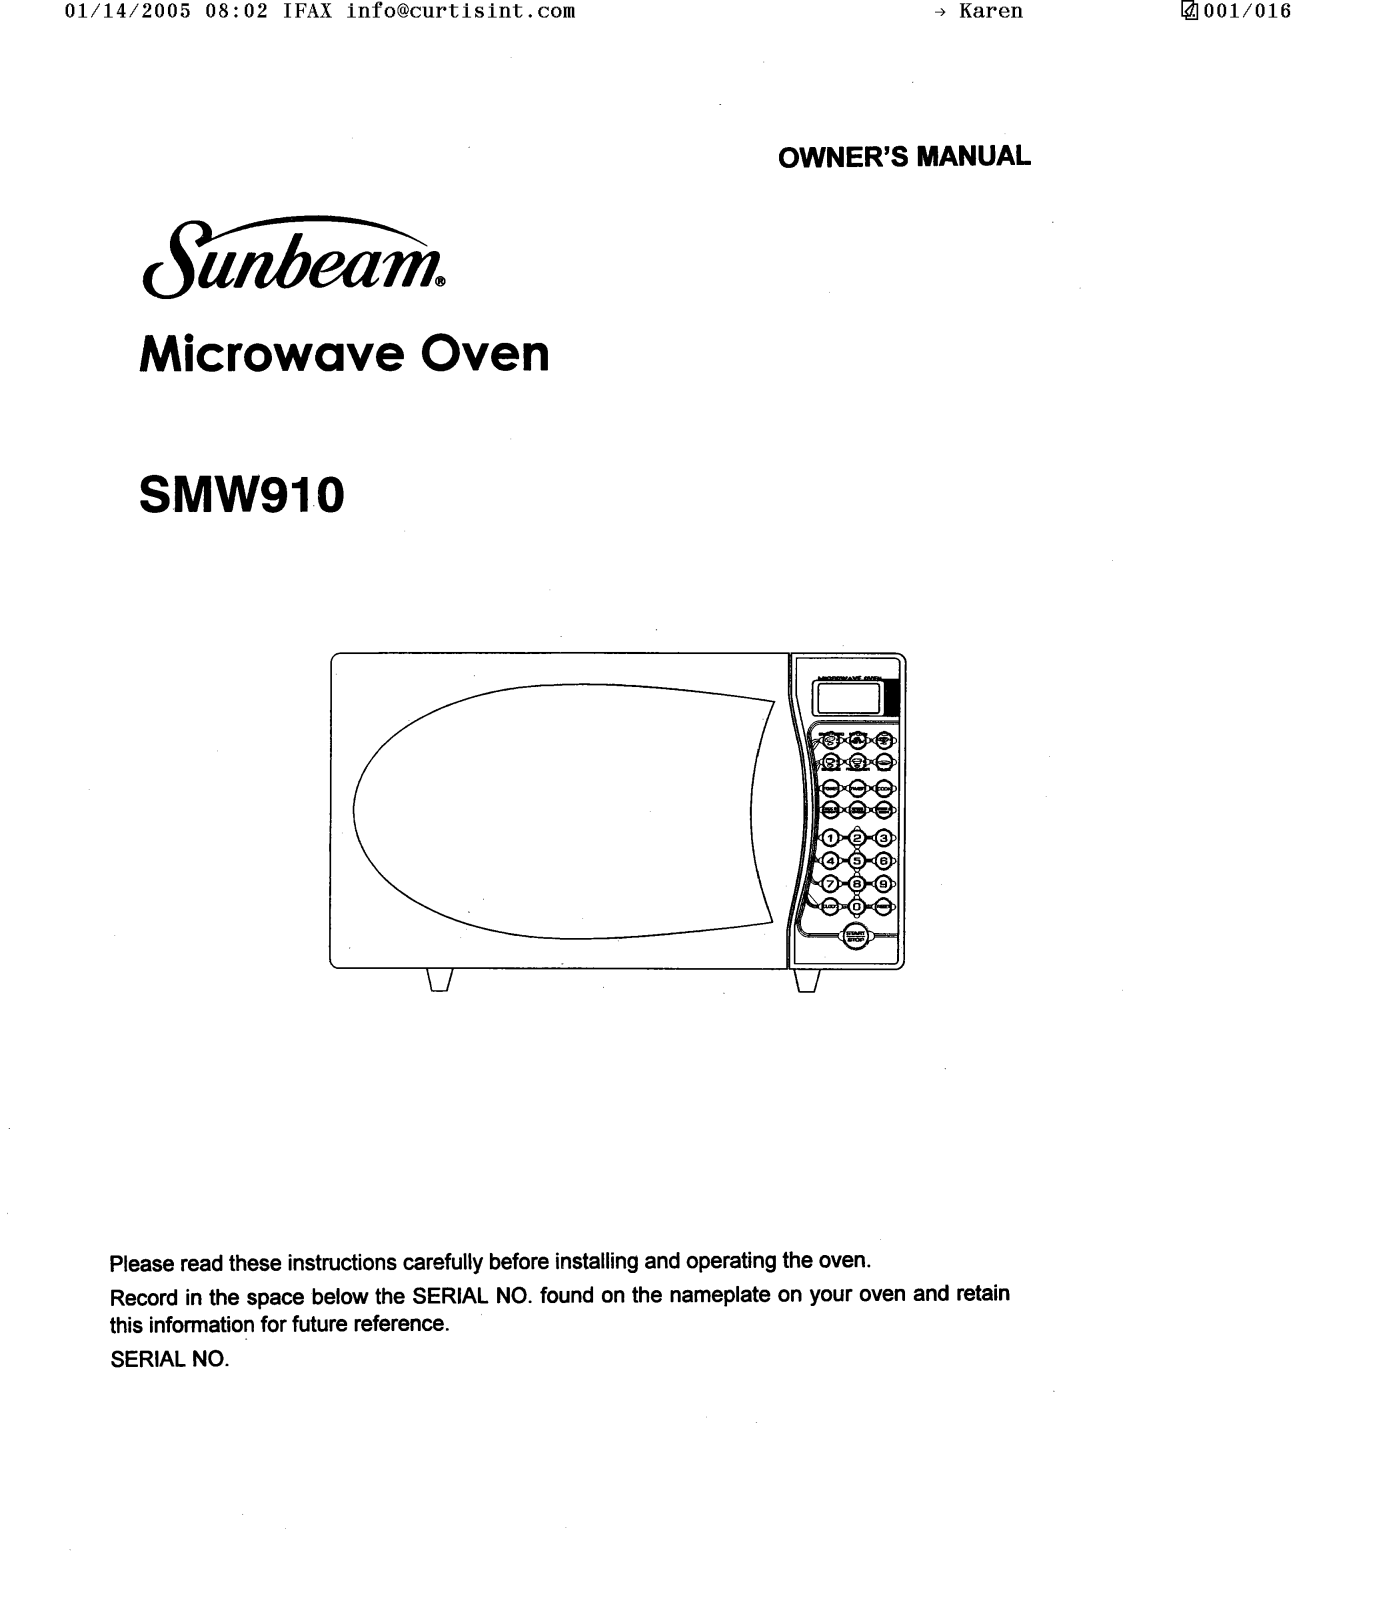 Sunbeam SMW910 Owner's Manual